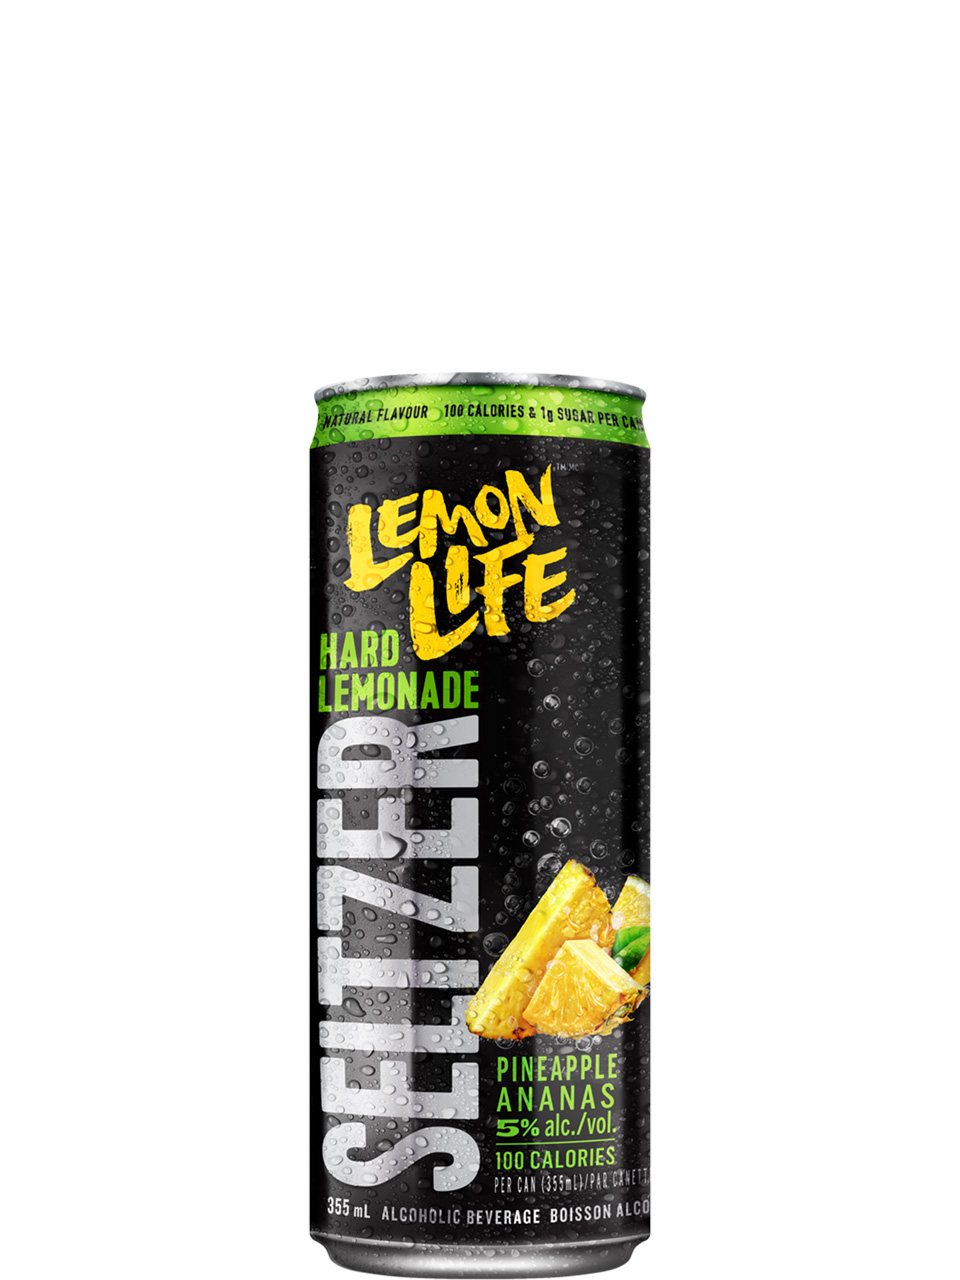 Lemon Life Pineapple Lemonade 6 Pack Cans